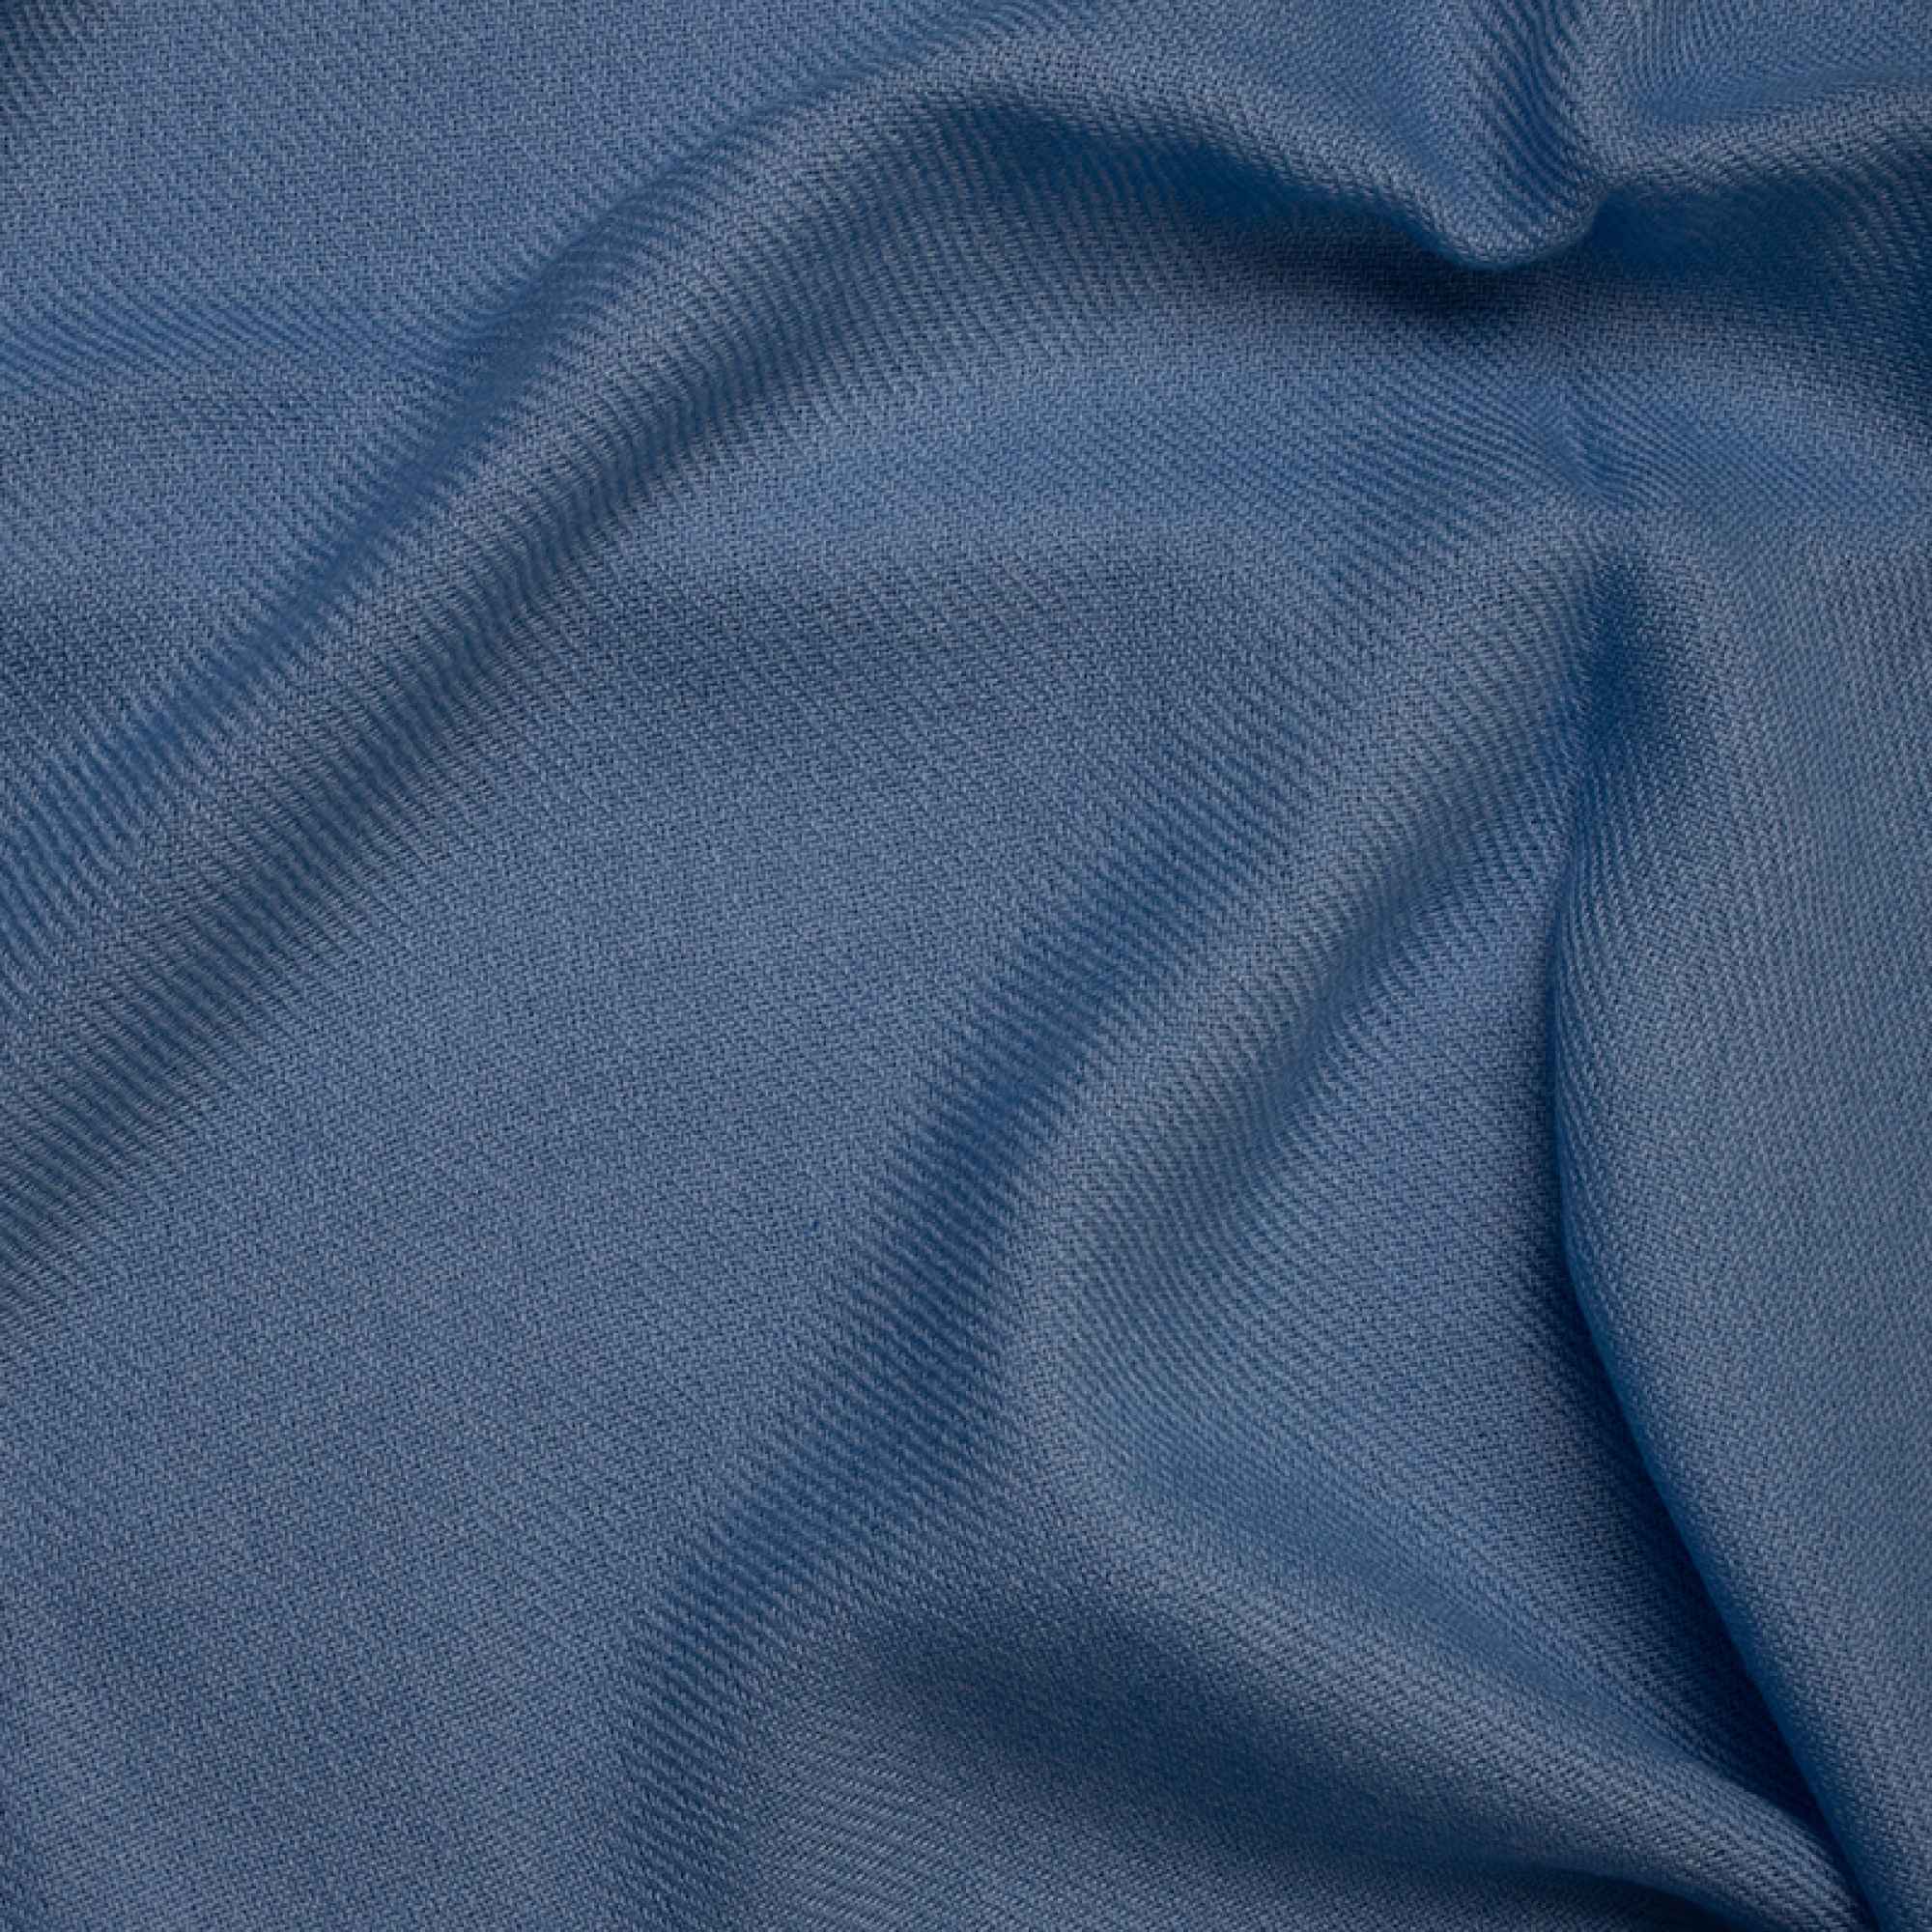 Cashmere accessories blanket toodoo plain xl 240 x 260 little boy blue 240 x 260 cm